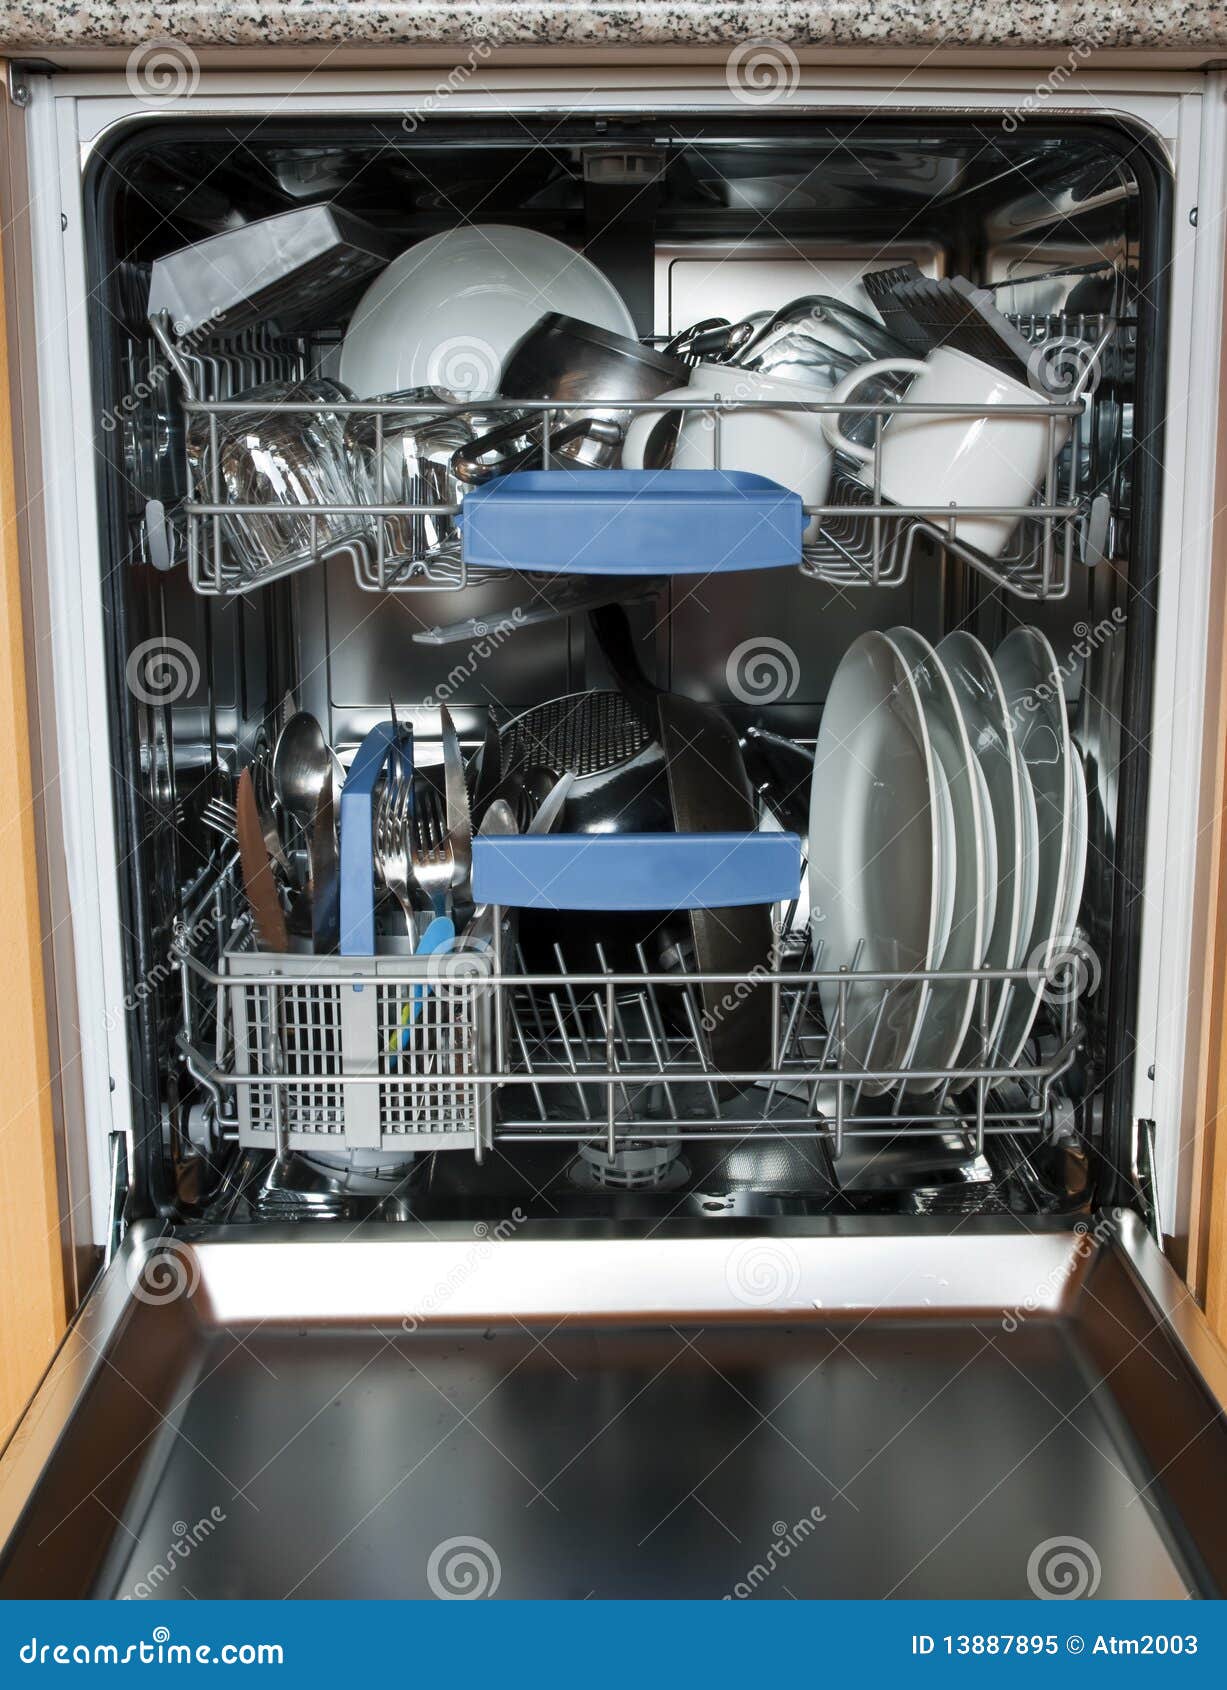 kitchen dishwasher